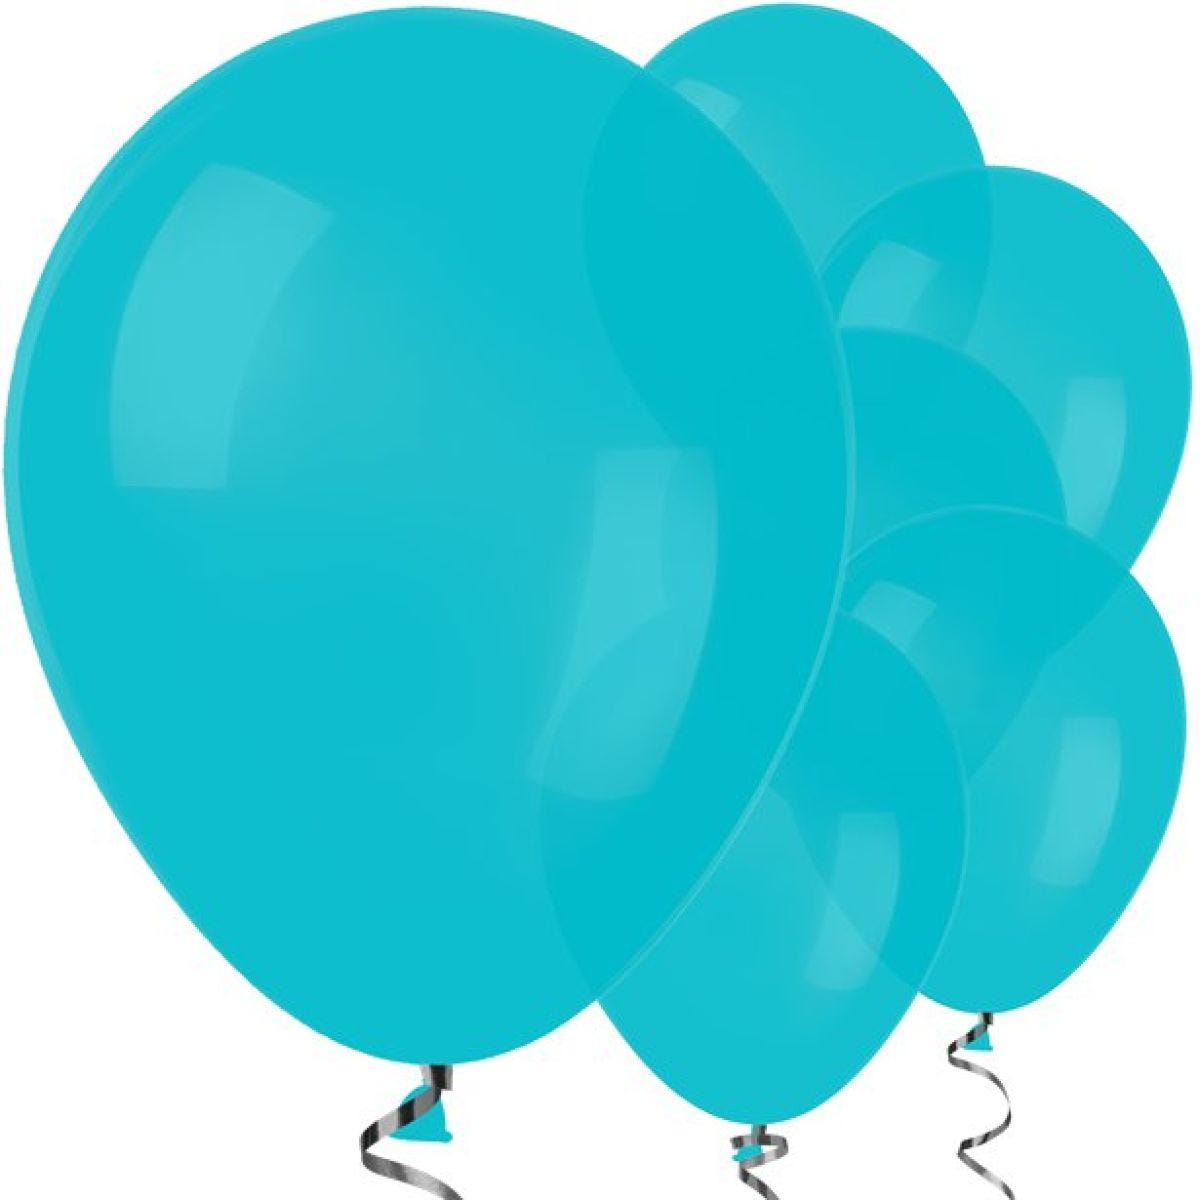 Turquoise Balloons - 12" Latex Balloons